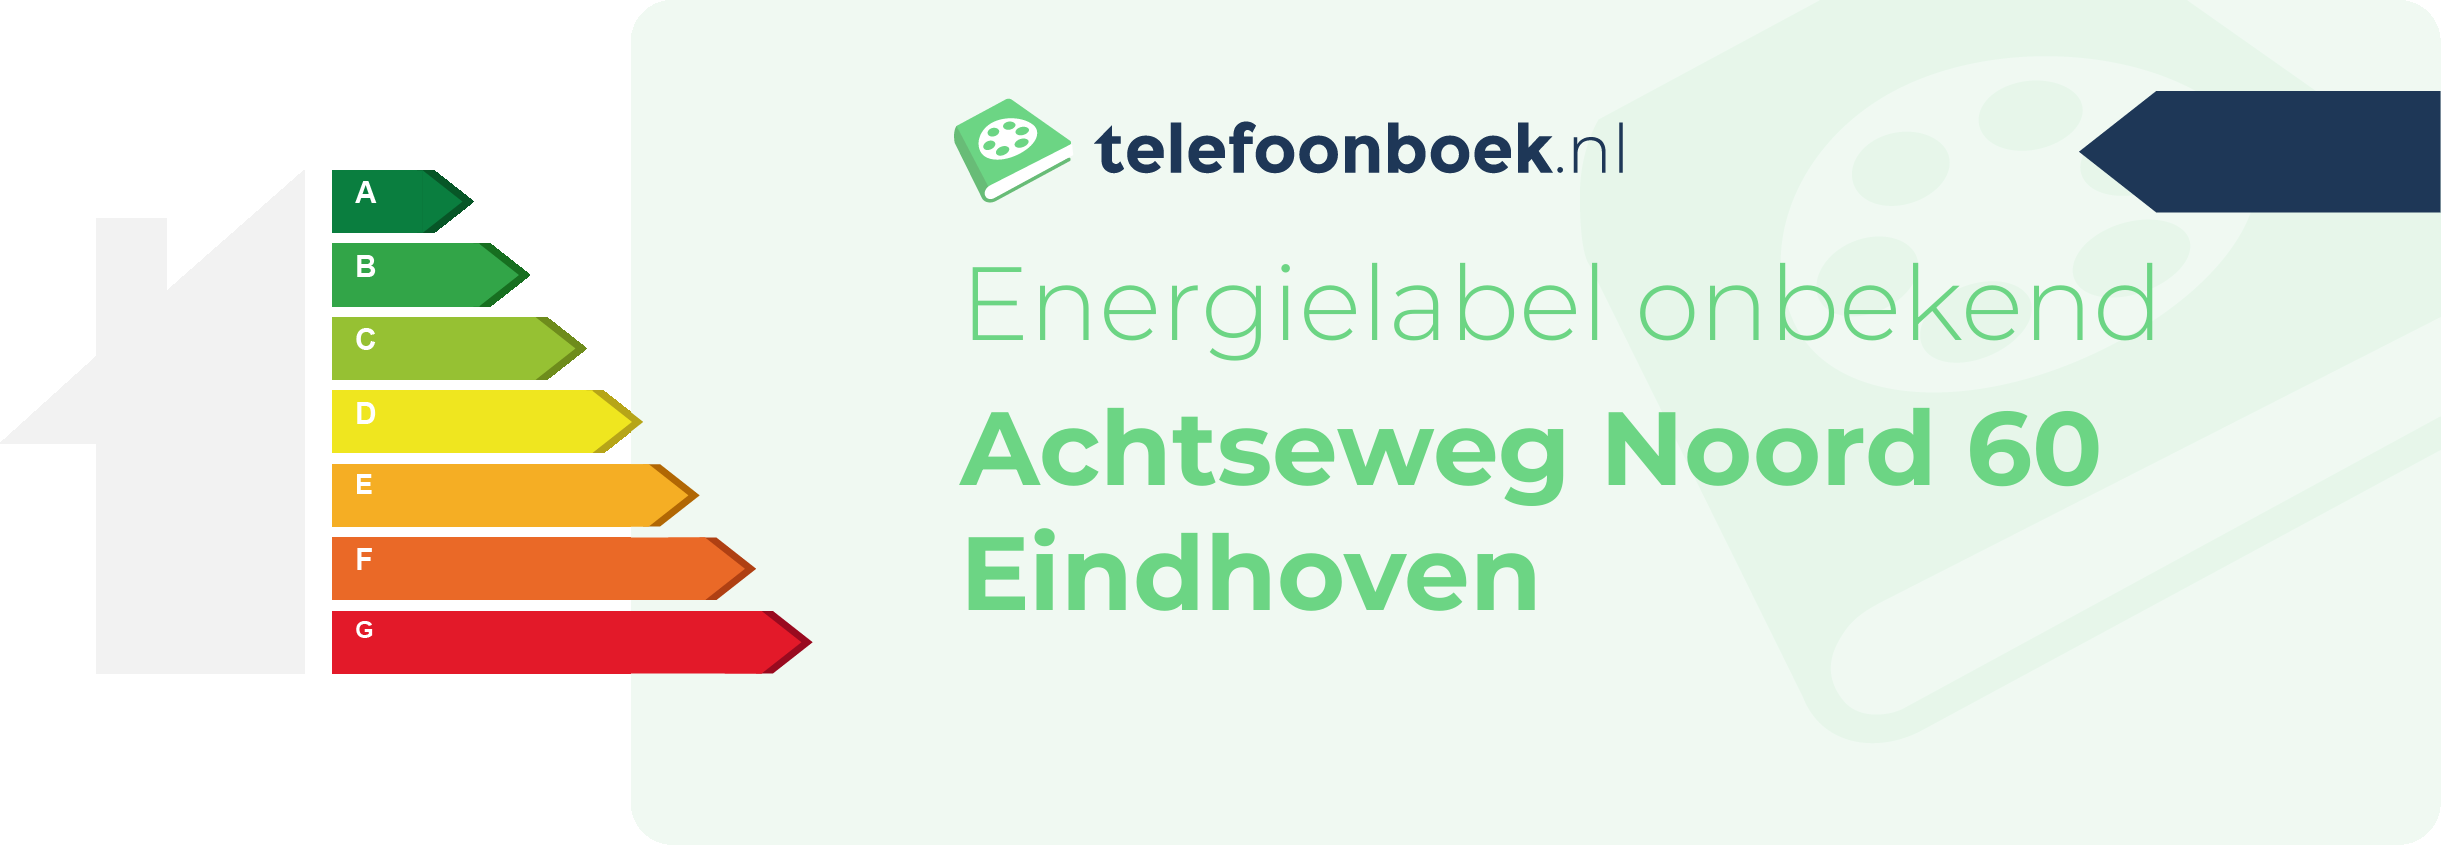 Energielabel Achtseweg Noord 60 Eindhoven